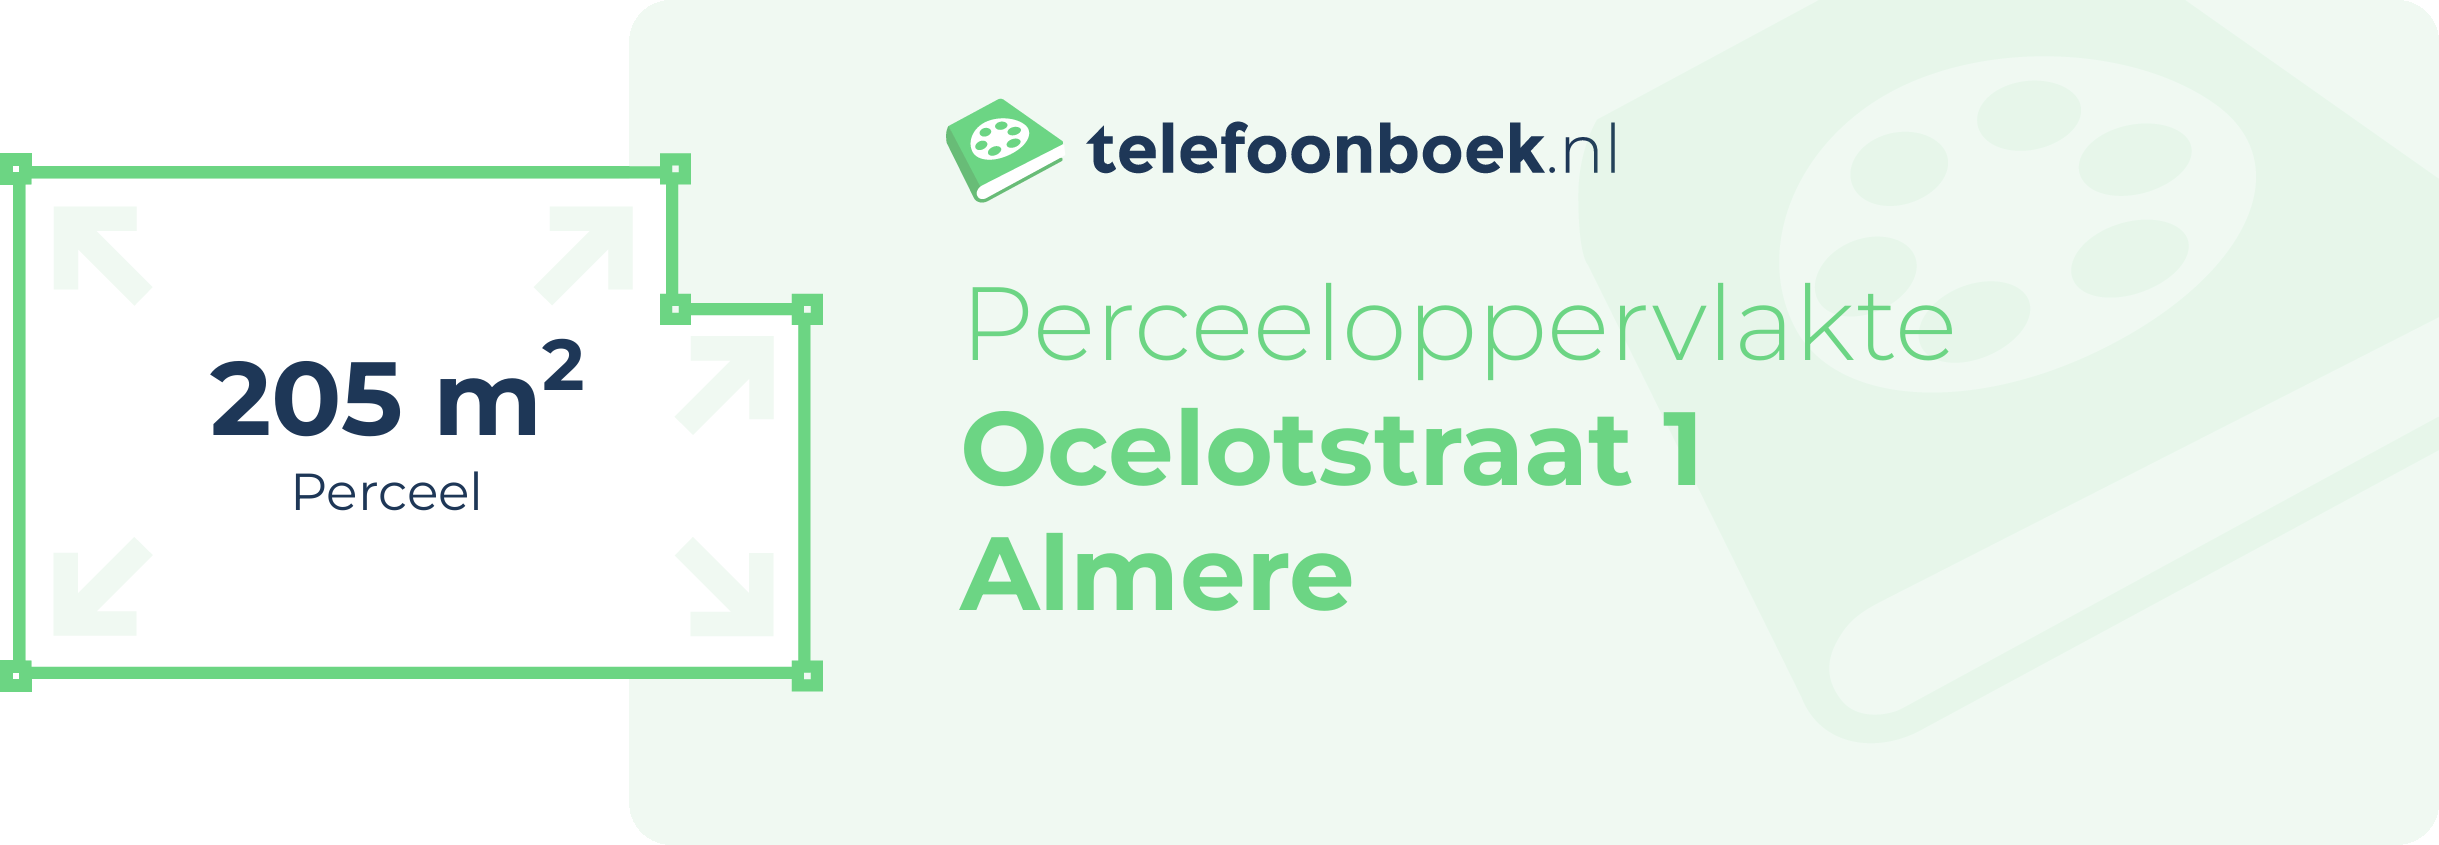 Perceeloppervlakte Ocelotstraat 1 Almere